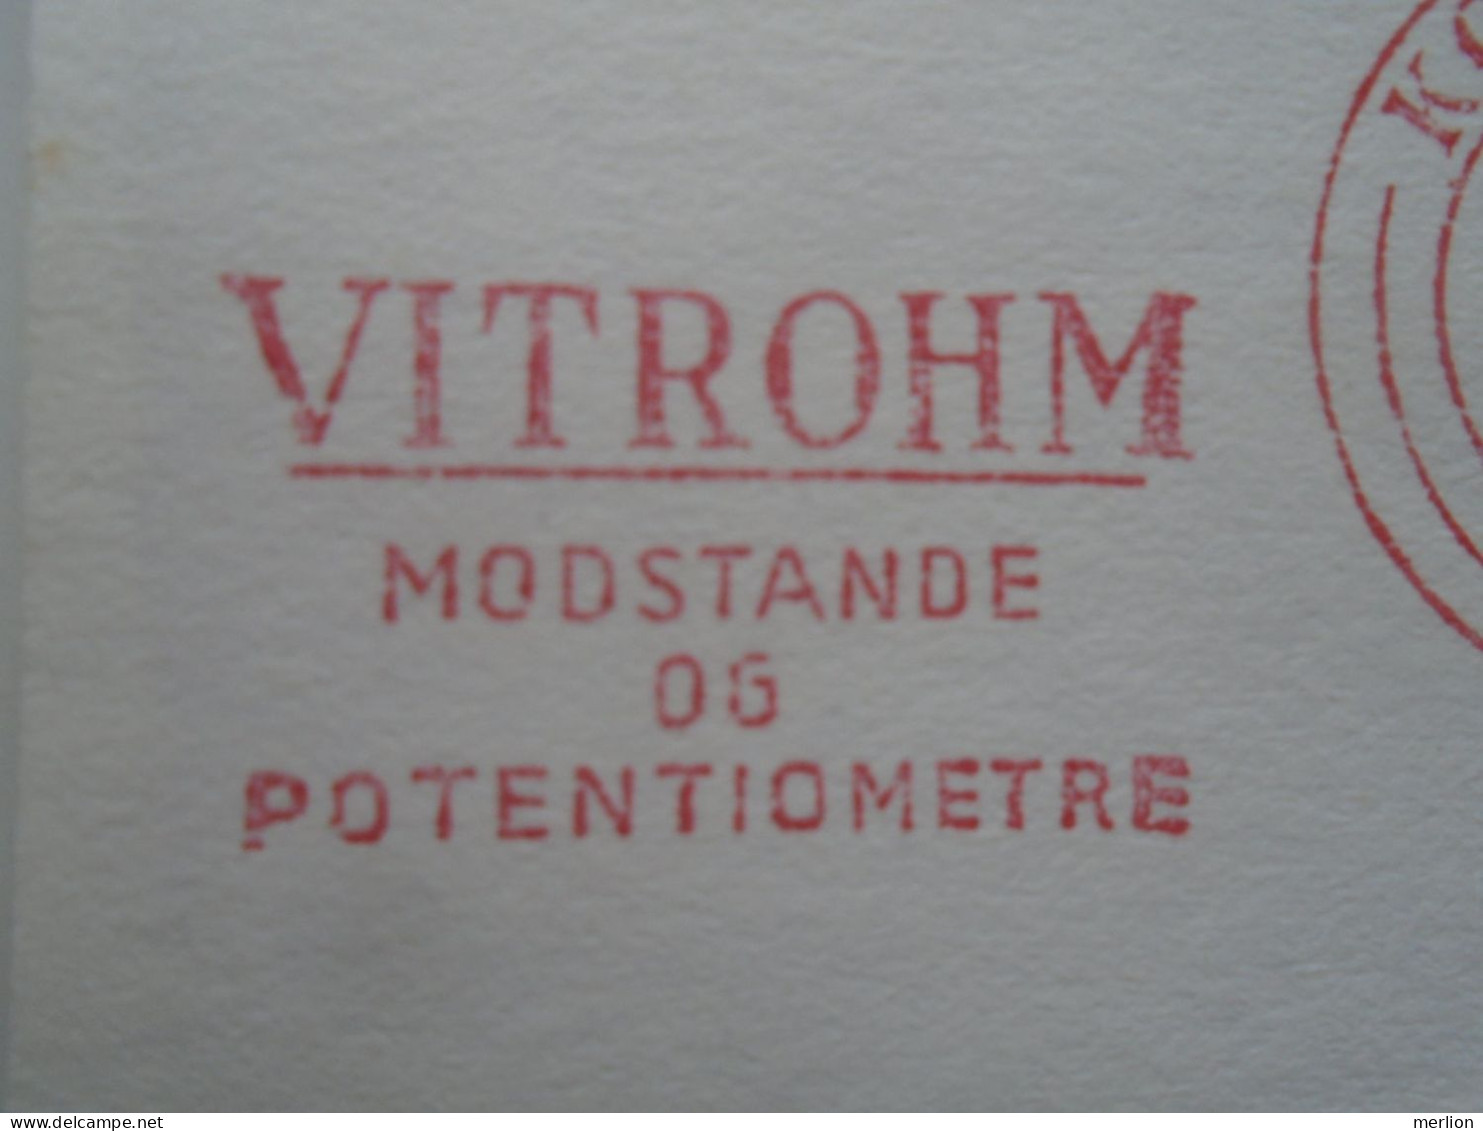 D200476   Red  Meter Stamp Cut- EMA - Freistempel  - Denmark -Danmark -  1970 Kobenhavn - VITROHM -Electro - Machines à Affranchir (EMA)